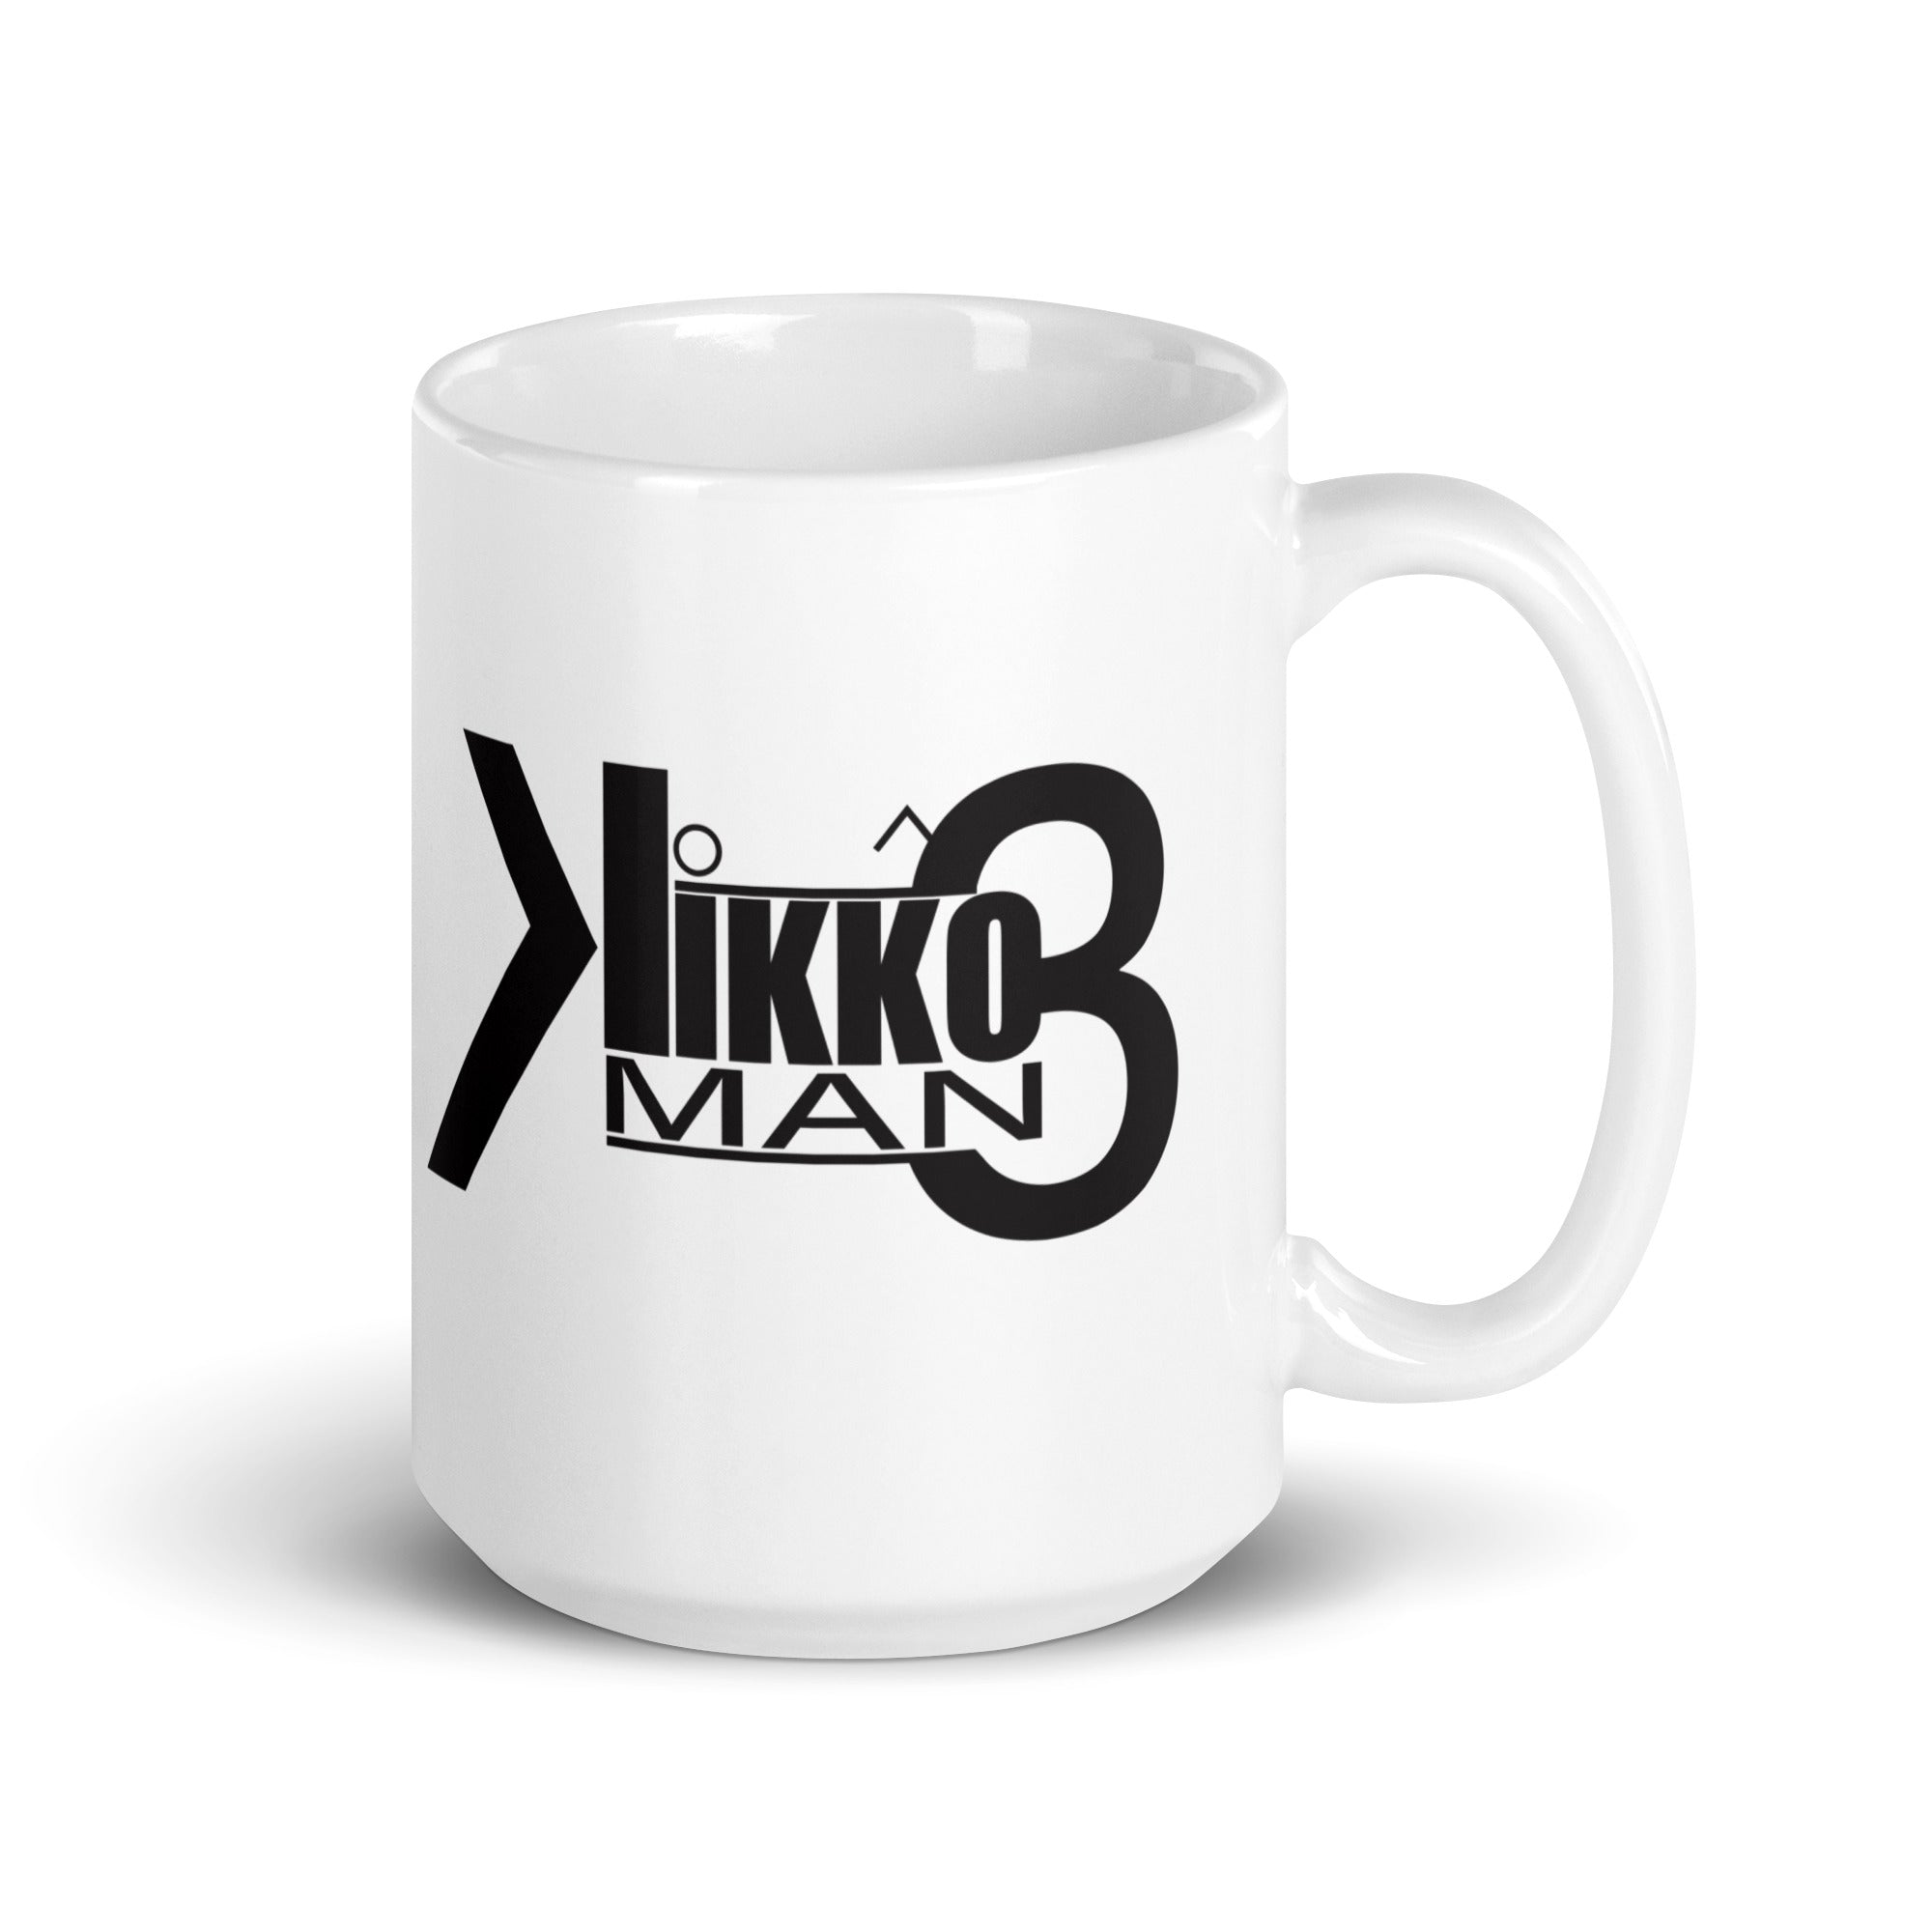 Kikkoman3 - White glossy mug